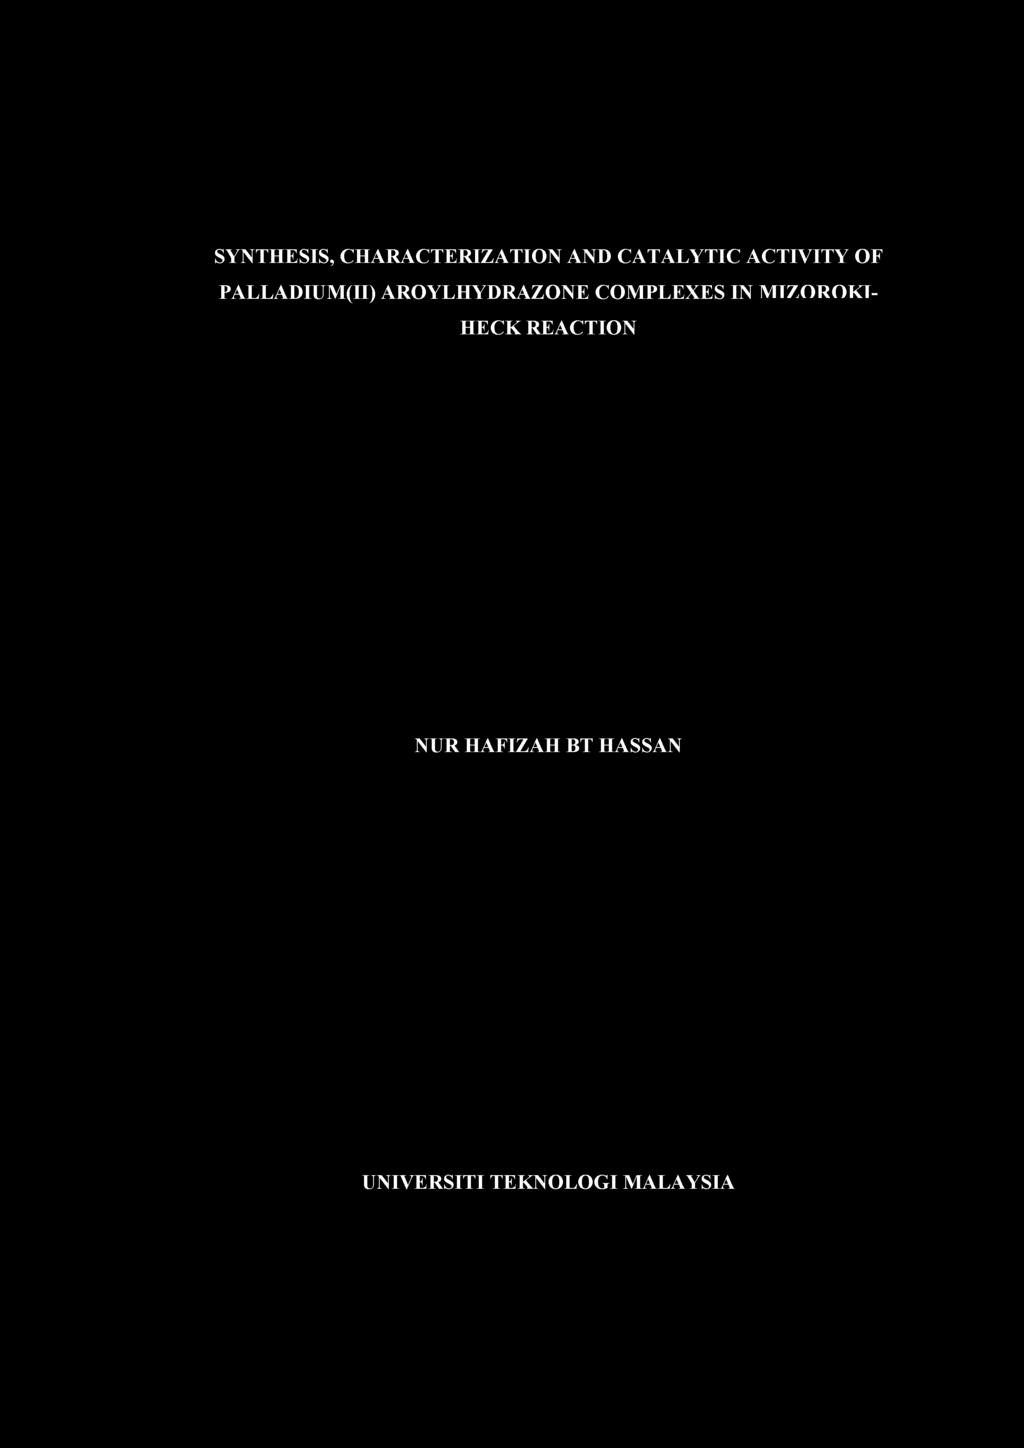 SYNTHESIS, CHARACTERIZATION AND CATALYTIC ACTIVITY OF PALLADIUM(II) AROYLHYDRAZONE